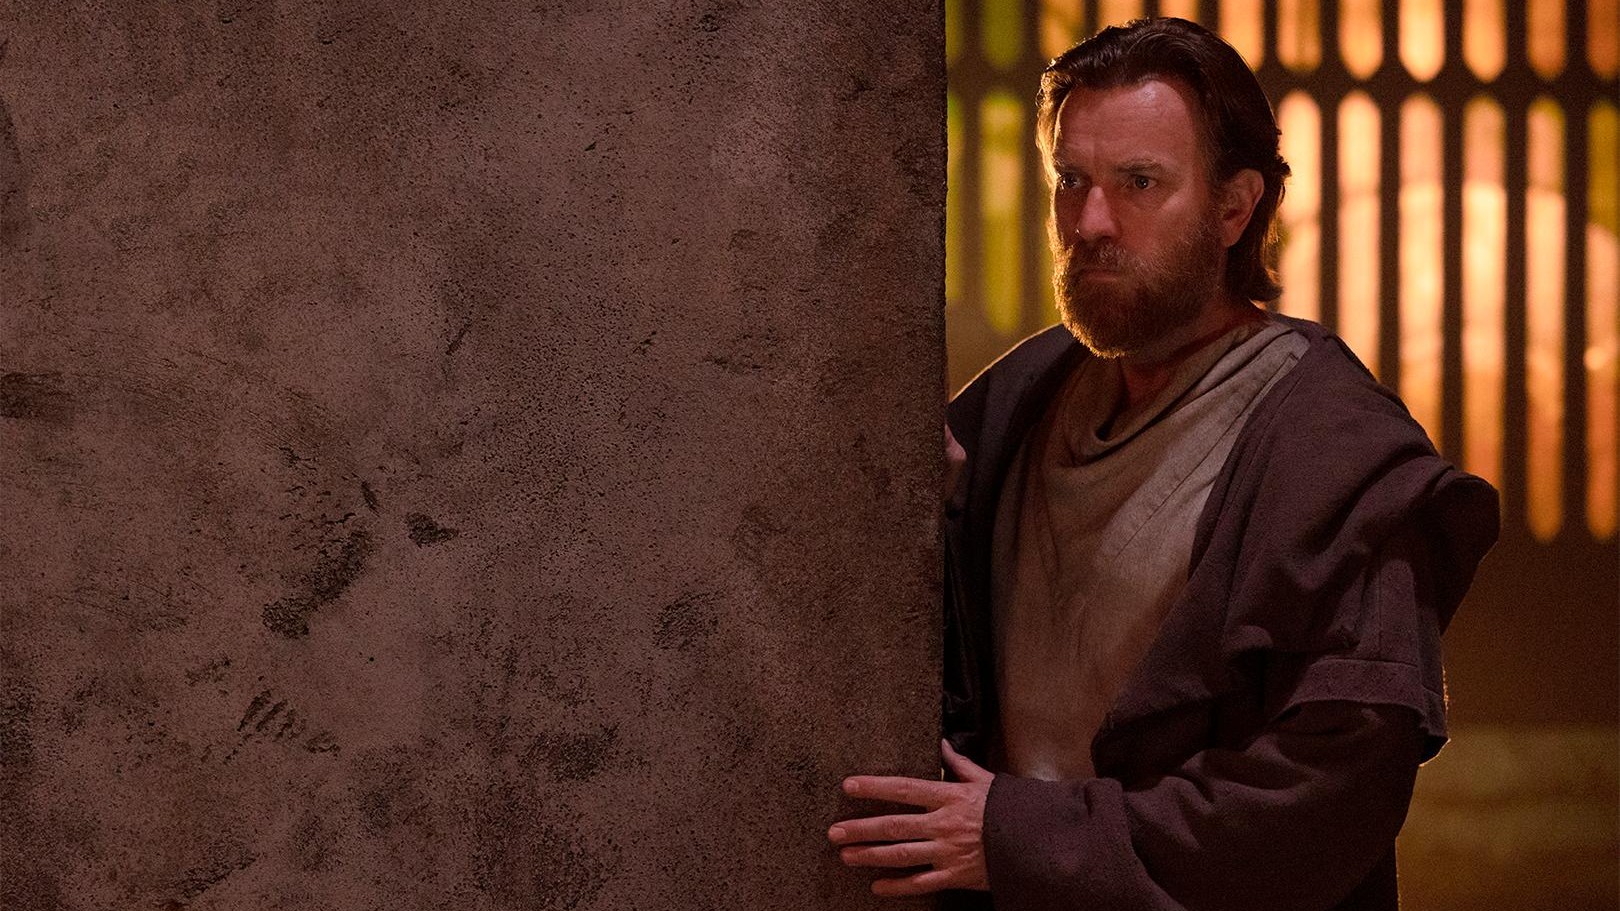 Obi-Wan Kenobi ซีรีส์ความหวังและพลังใหม่ของจักรวาล Star Wars รีวิวสองอีพีแรกแบบไม่สปอยล์  – THE STANDARD